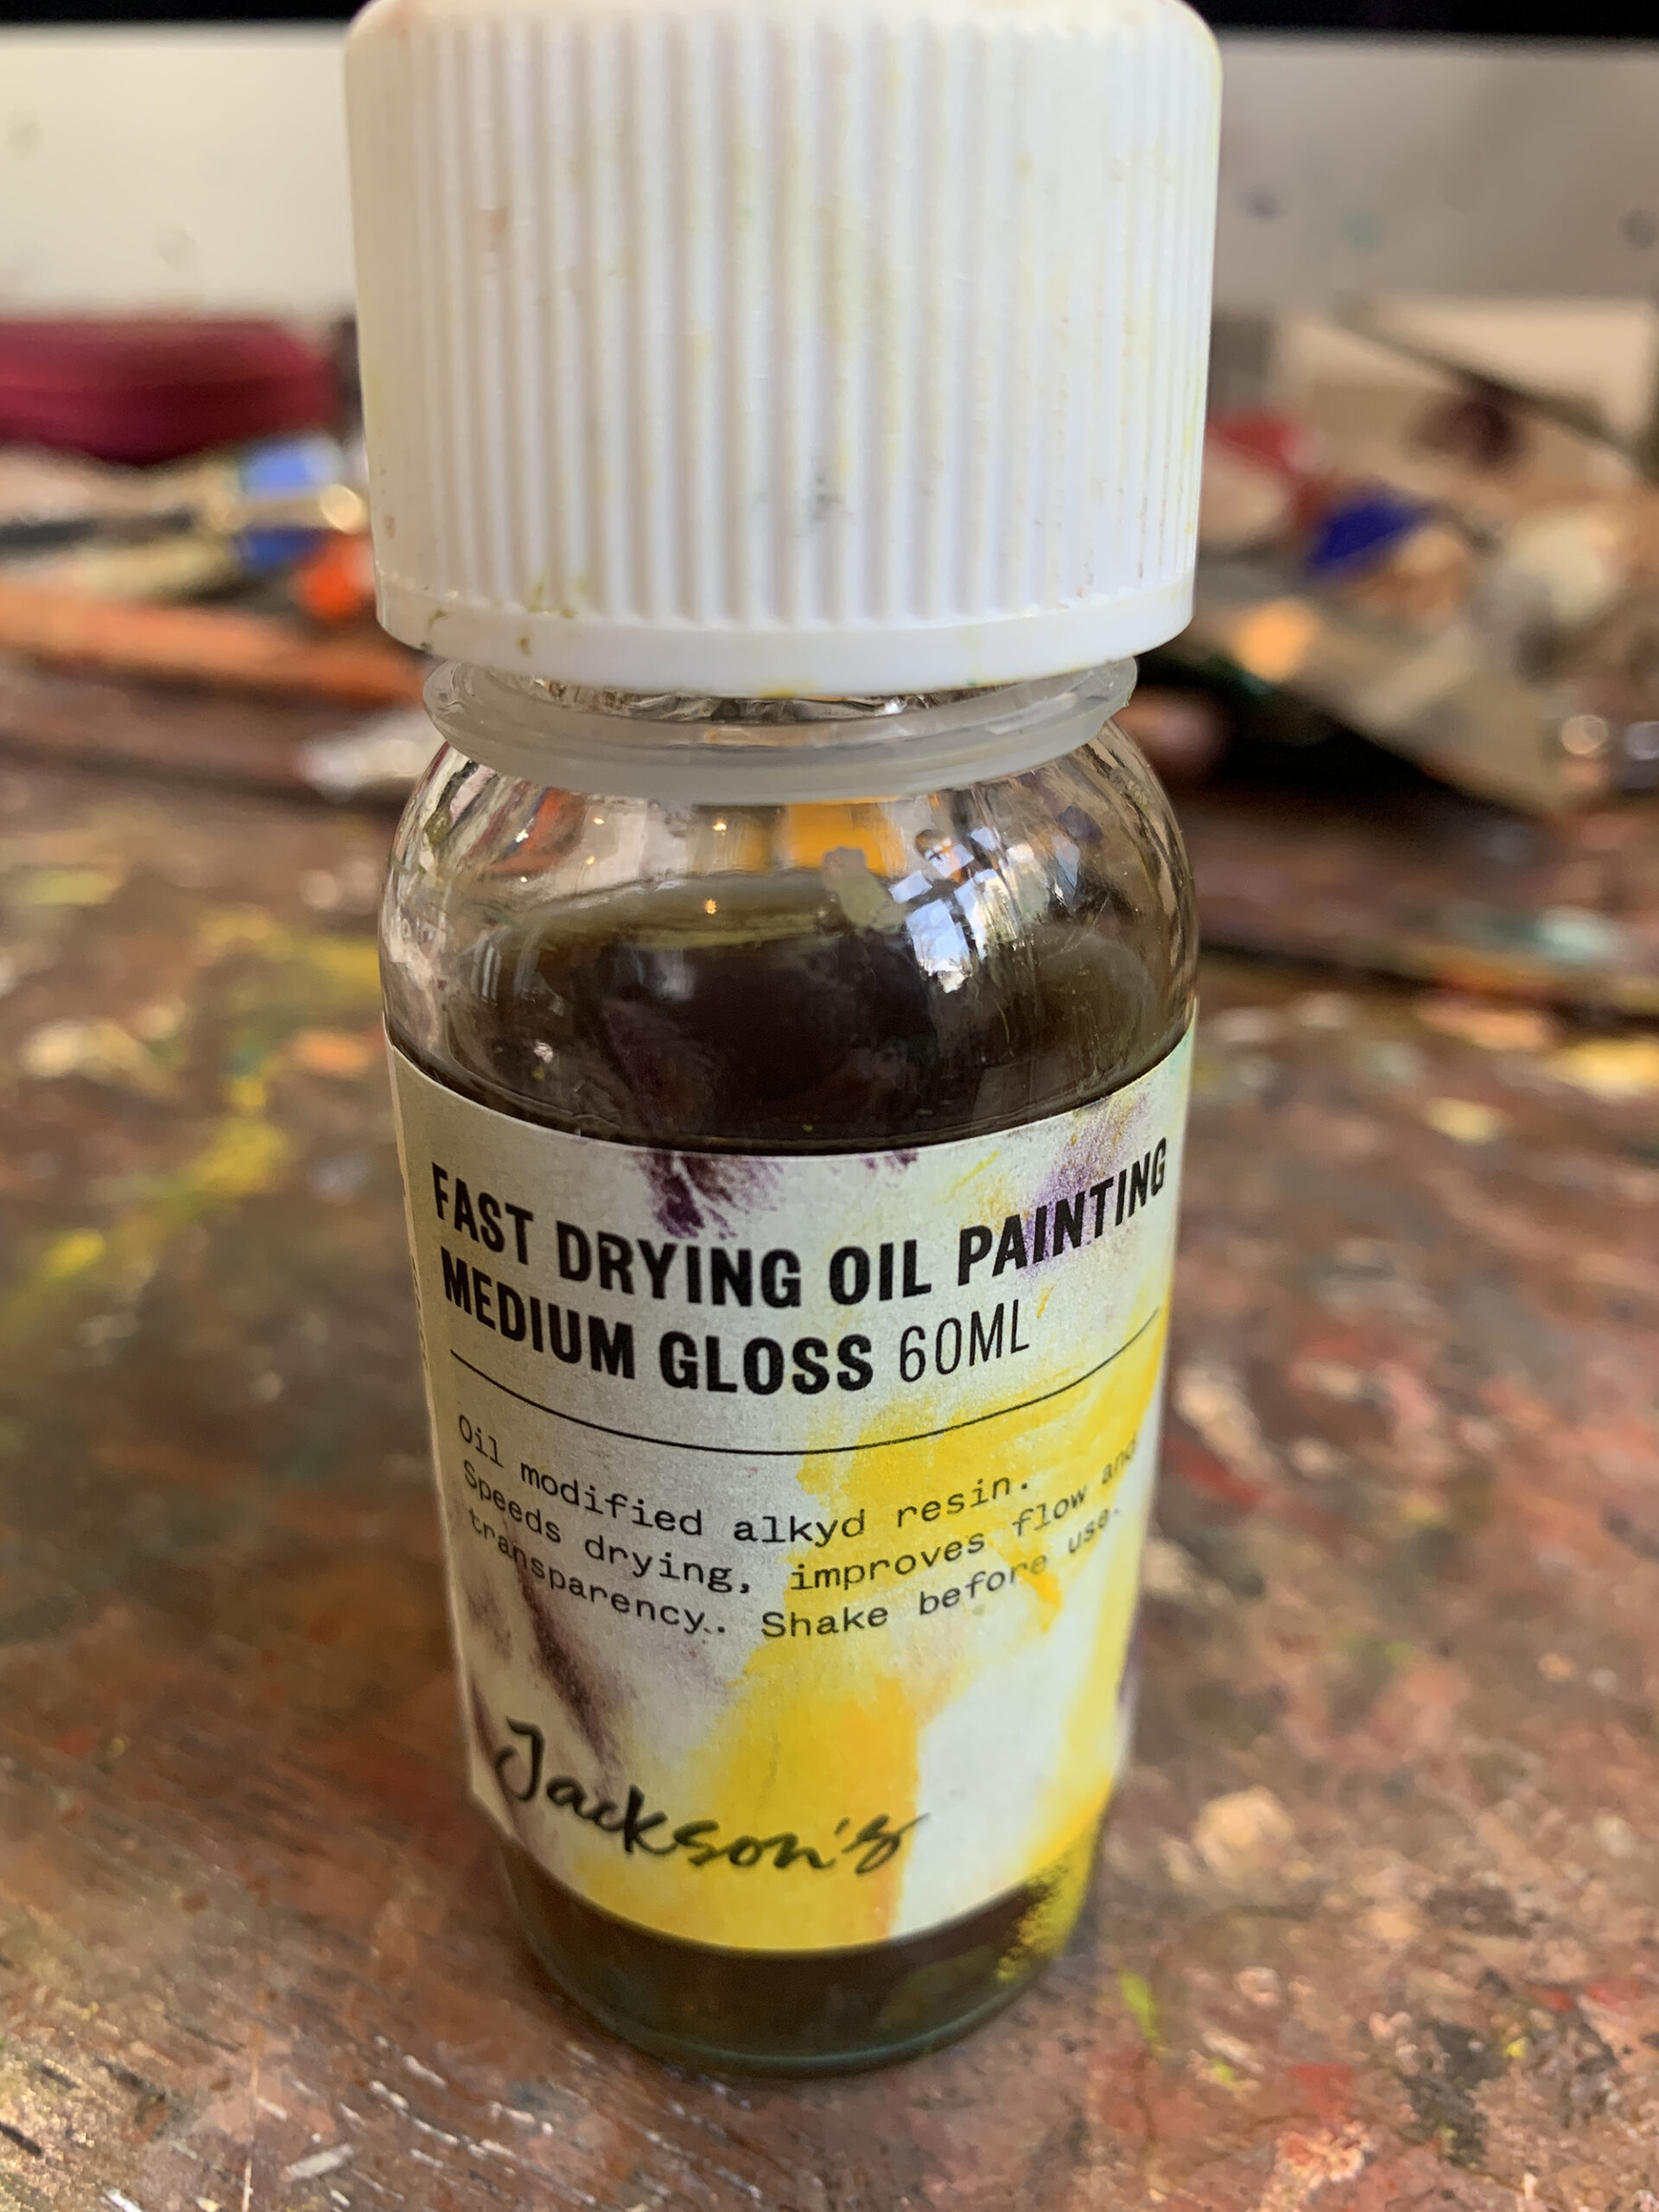 Jackson's Fast Drying Oil Painting Medium Gloss